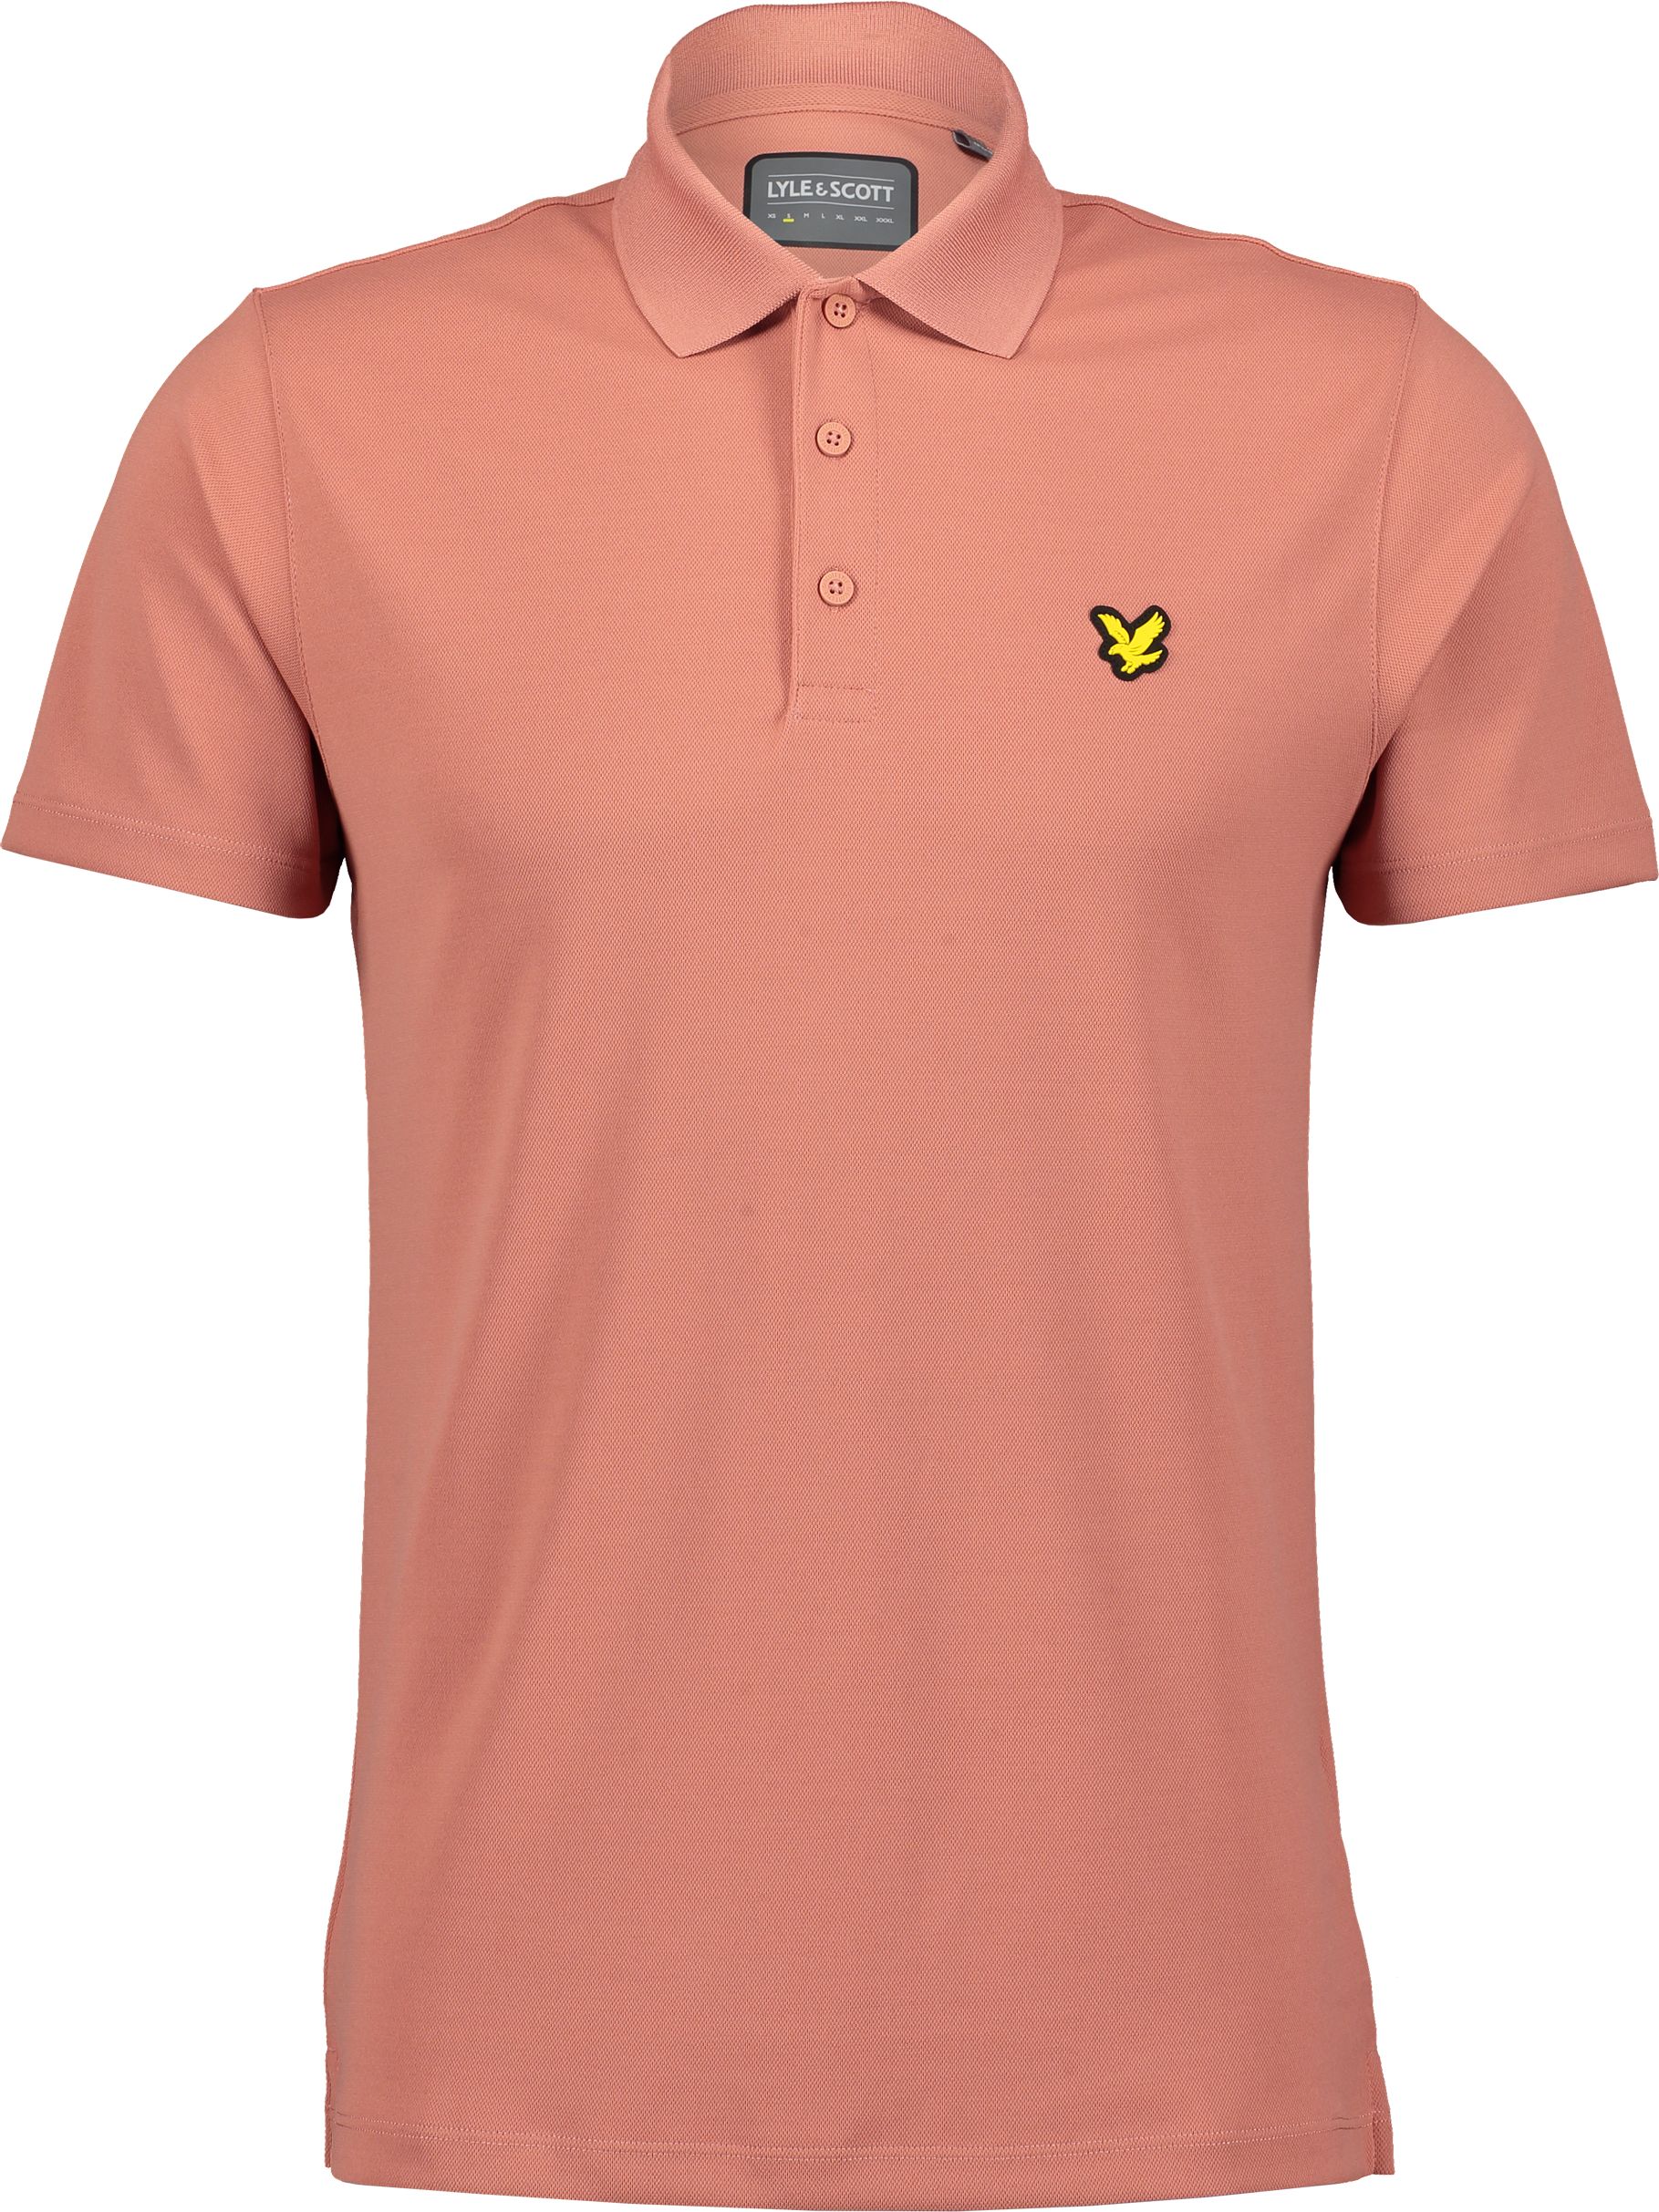 LYLE & SCOTT, Golf Tech Polo Shirt